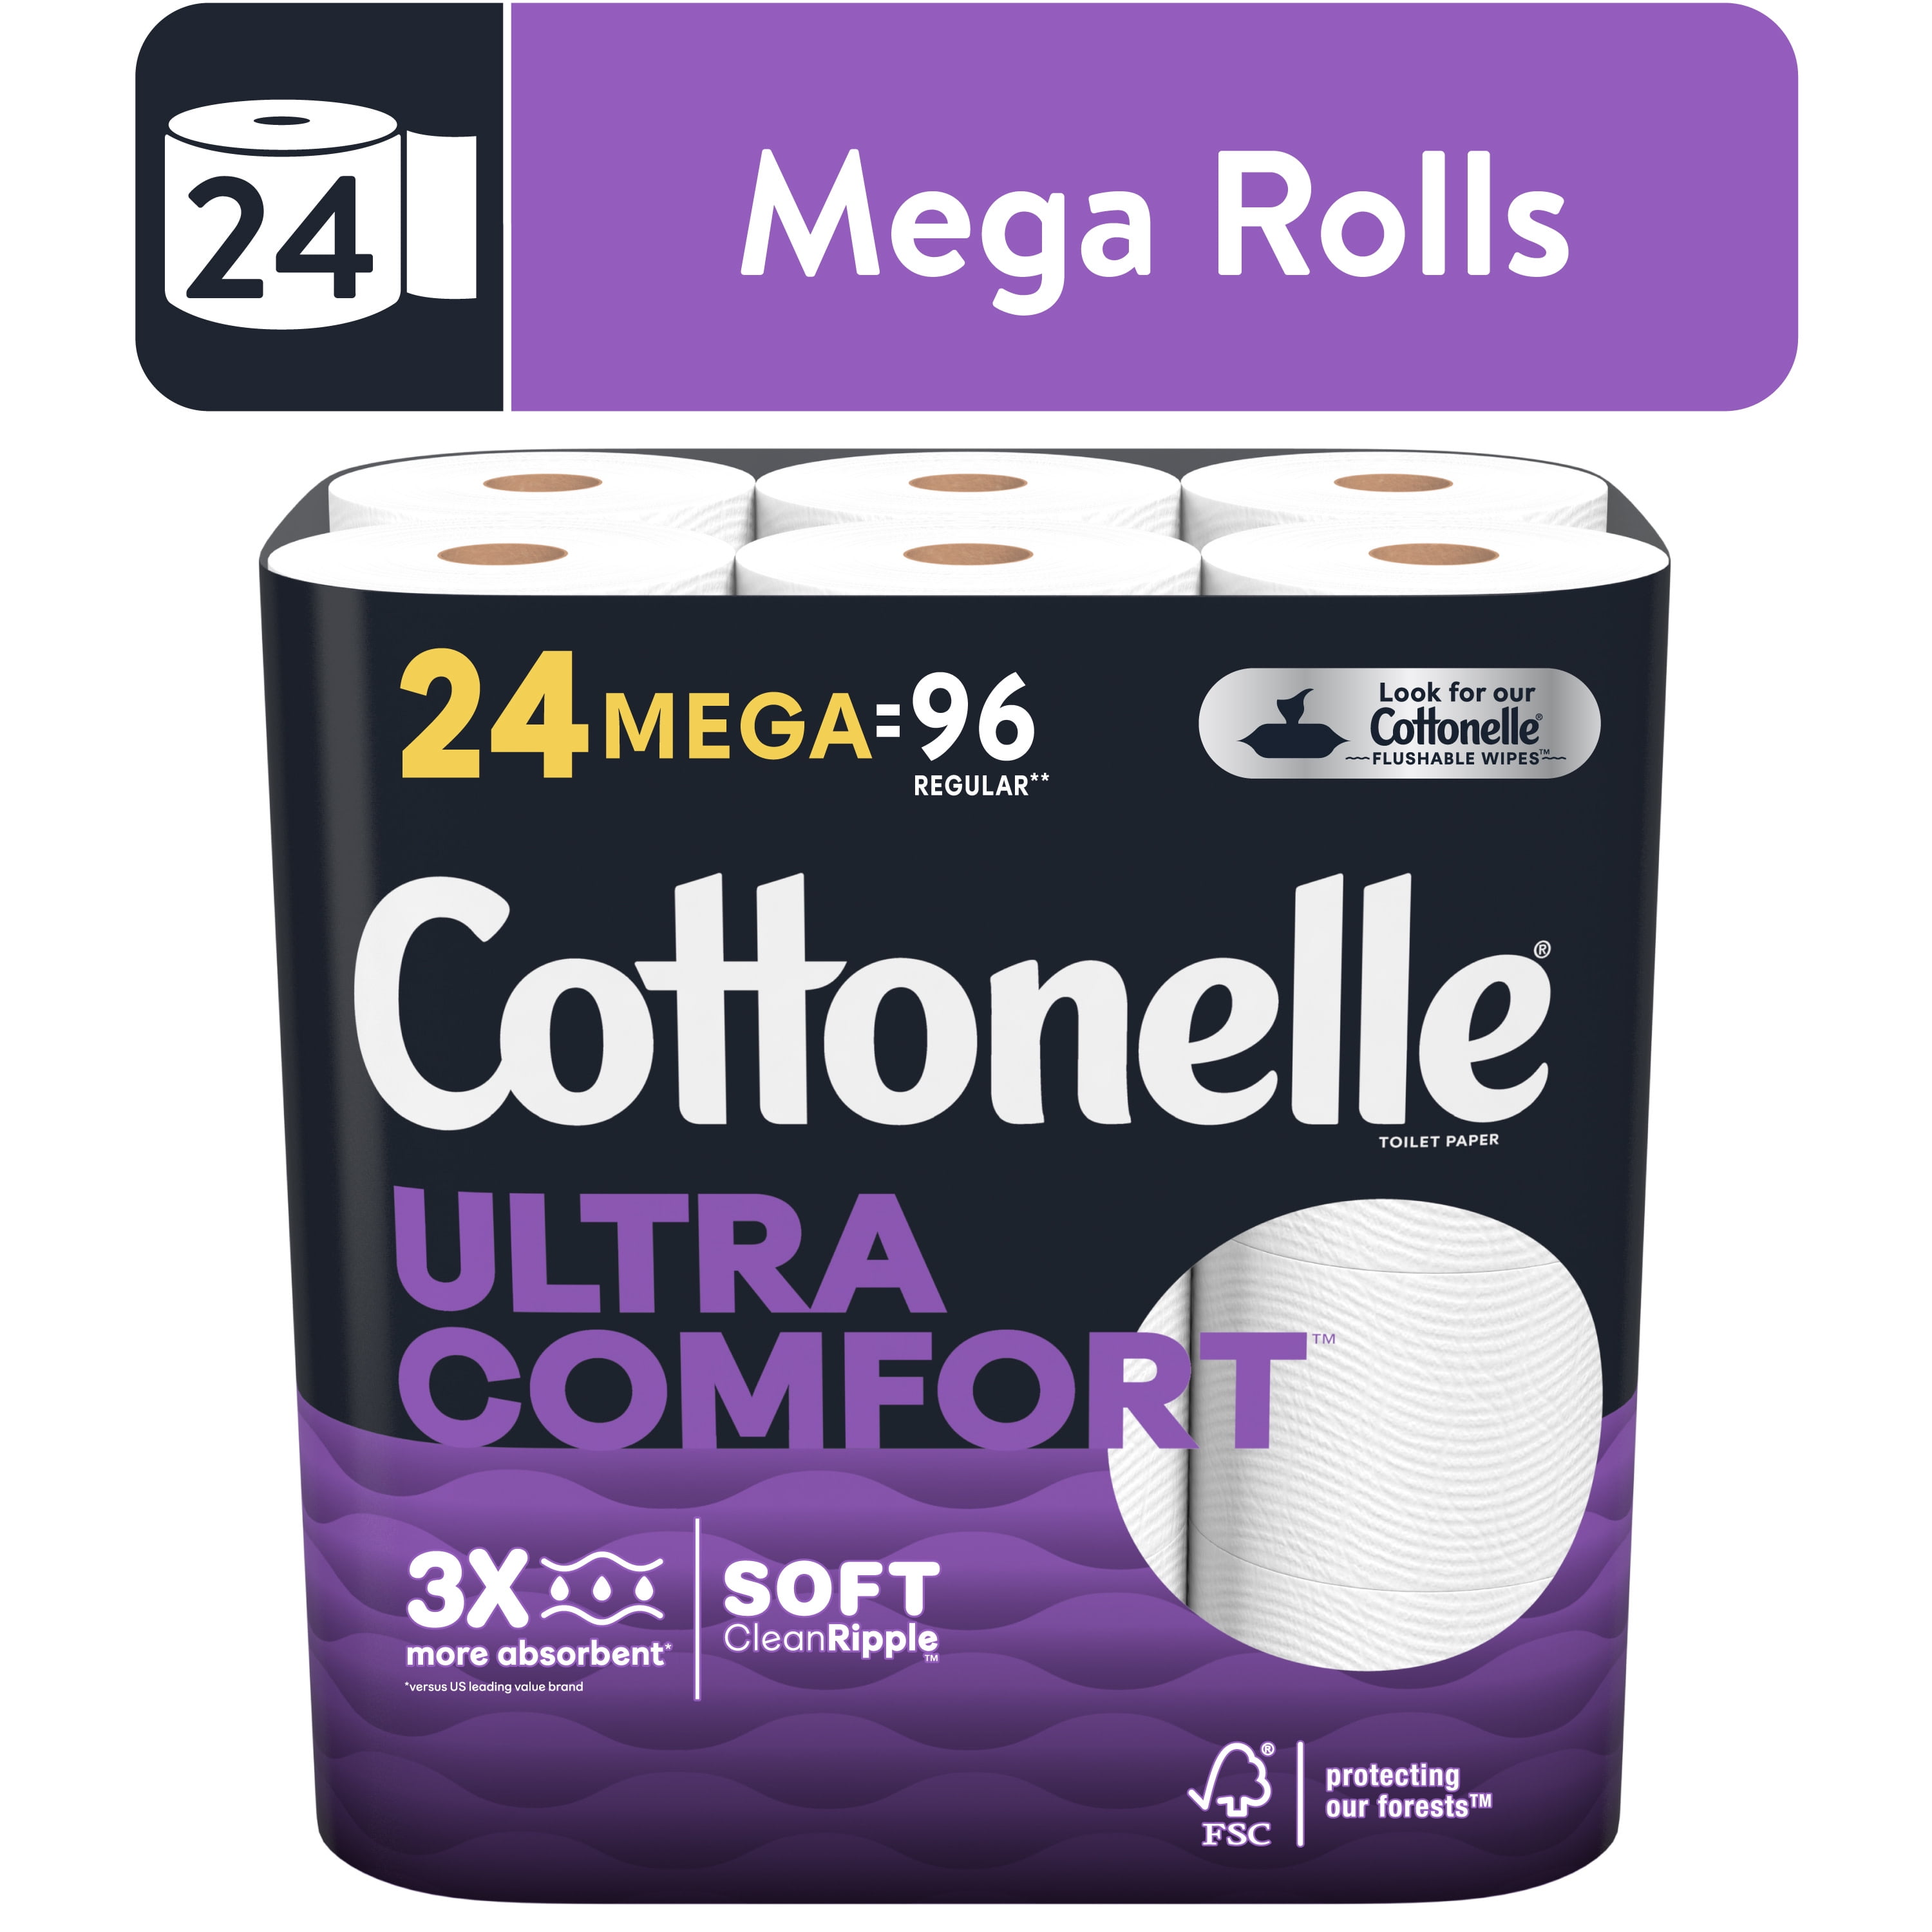 Cottonelle Ultra Comfort Toilet Paper, Strong Toilet Tissue, 24 Mega Rolls (24 Mega Rolls = 96 Regular Rolls), 268 Sheets per Roll